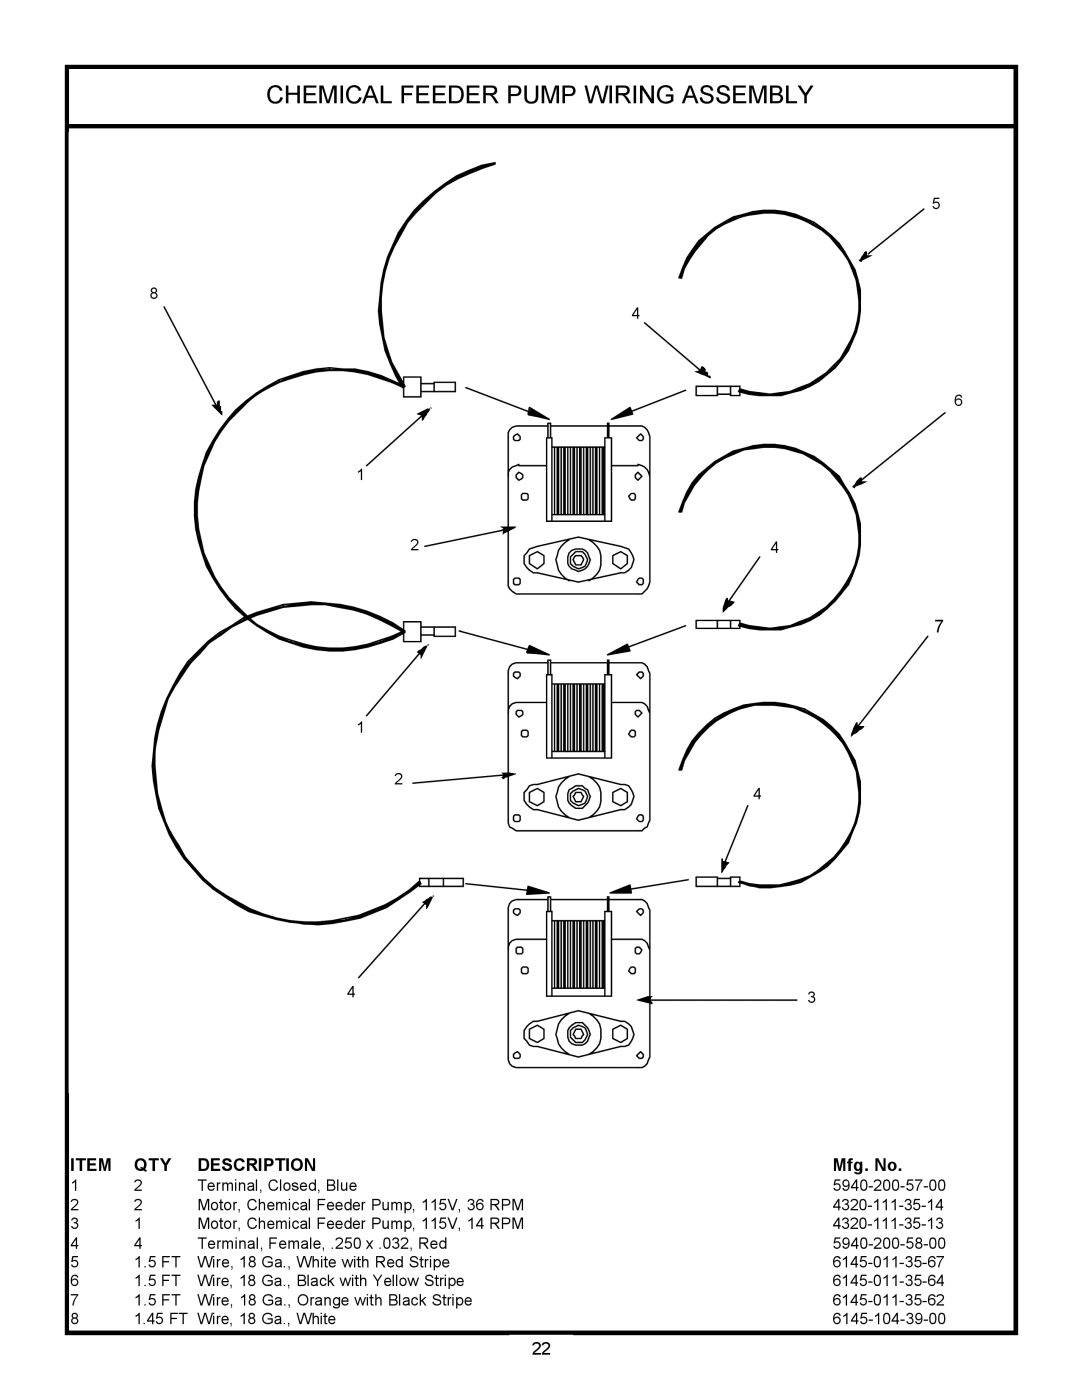 Jackson 24LTP, 24 LT technical manual Chemical Feeder Pump Wiring Assembly, Description, Mfg. No 